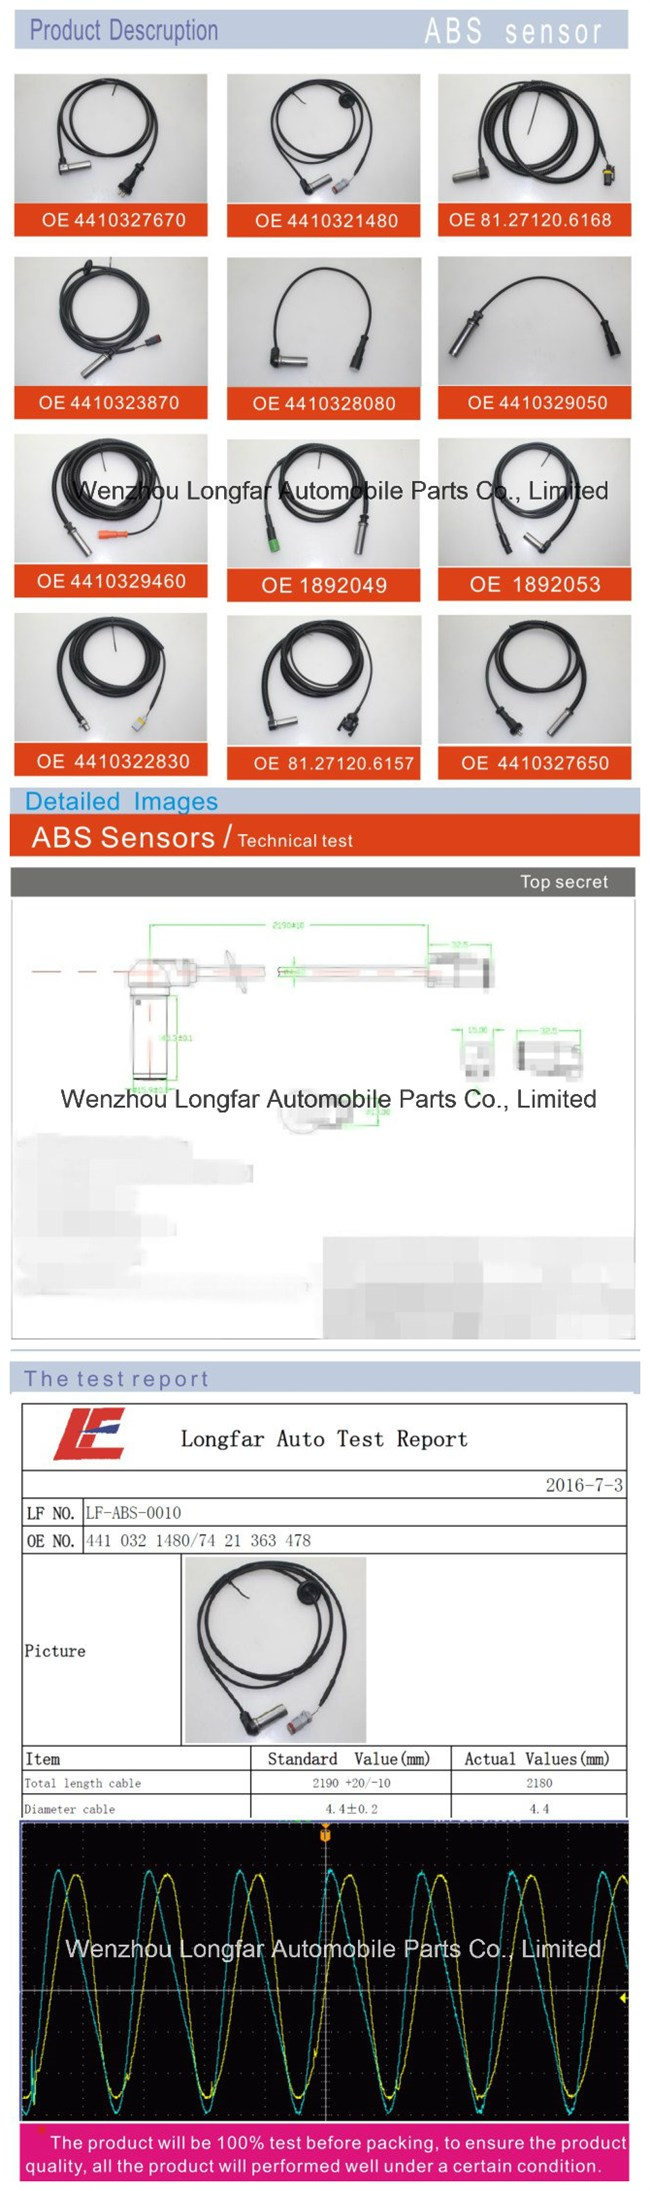 Auto Crankshaft Position Sensor Engine Speed Transducer Indicator Sensor 12141731886,Ss10965,12141734813,Ss10965,83.293,Seb1318,Lcs153 for BMW,Delphi,Hella